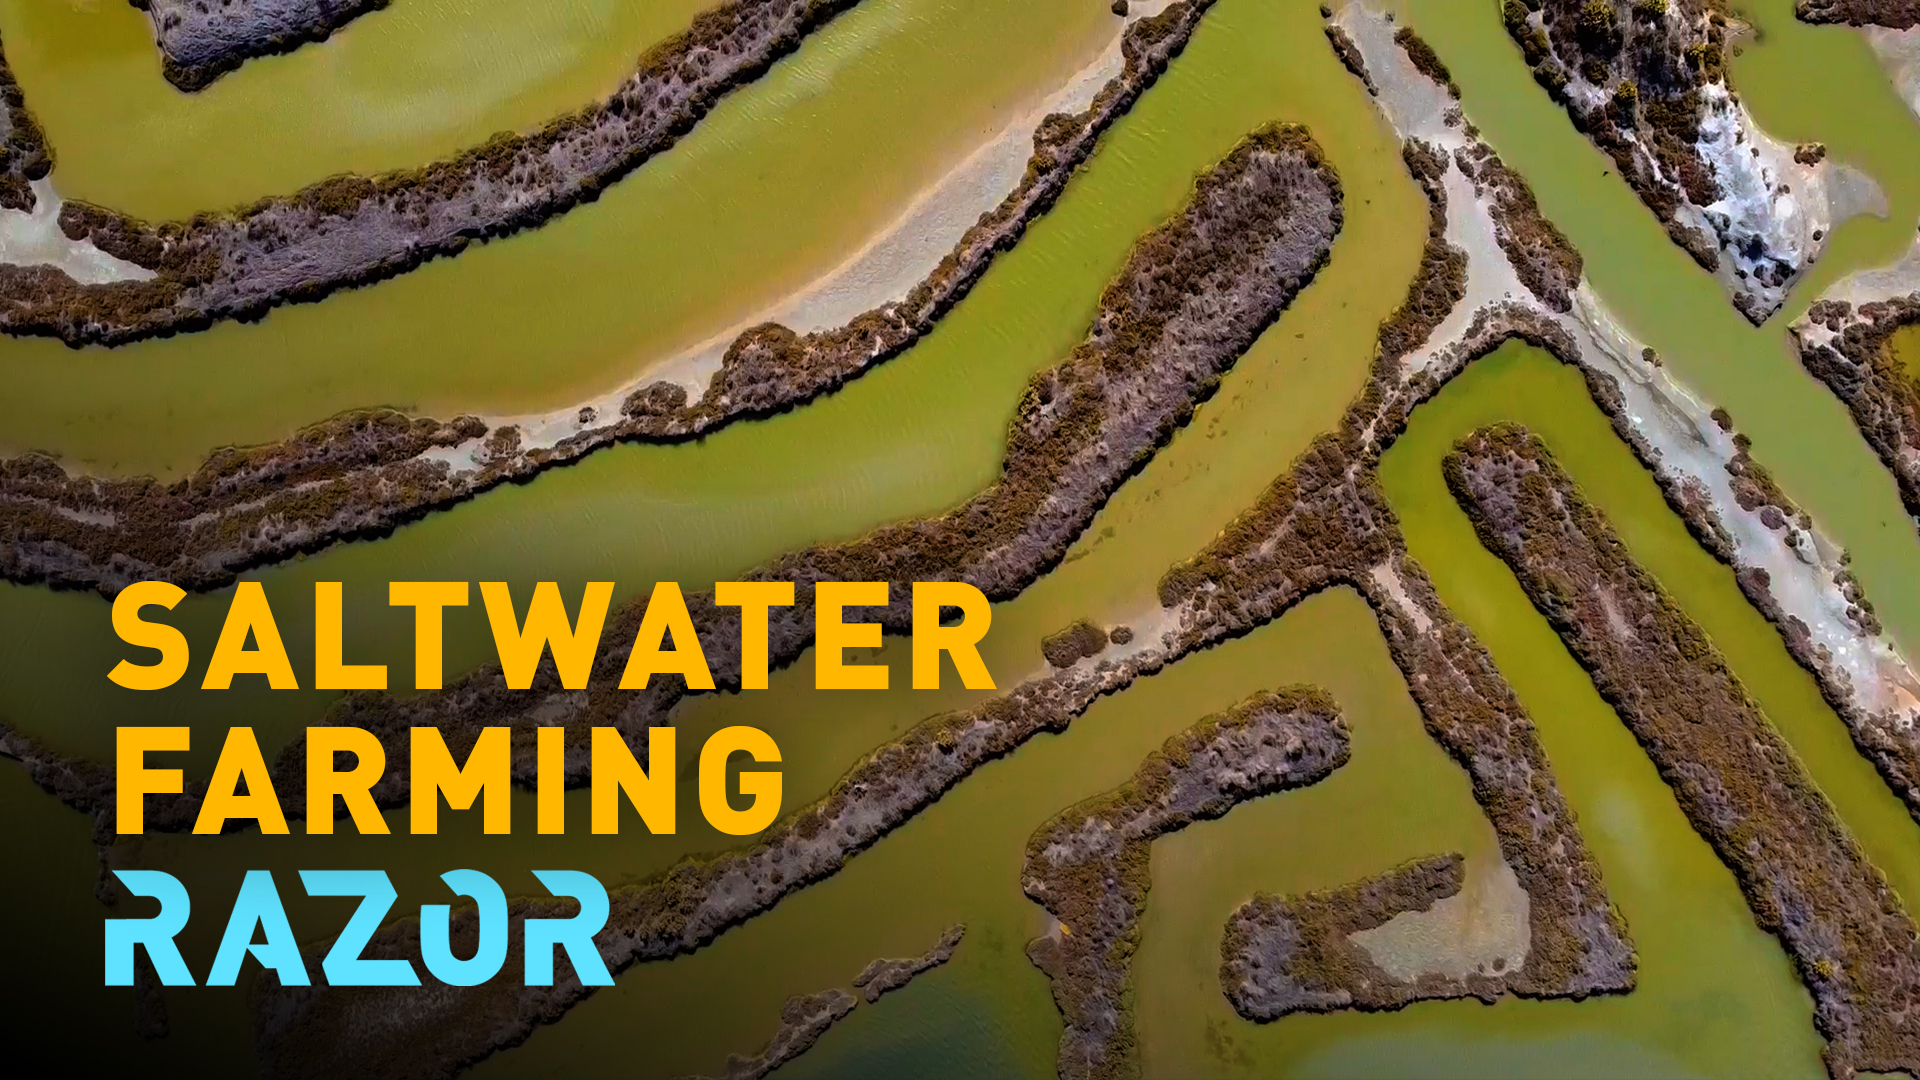 RAZOR: How restoring salt marshes can combat climate change